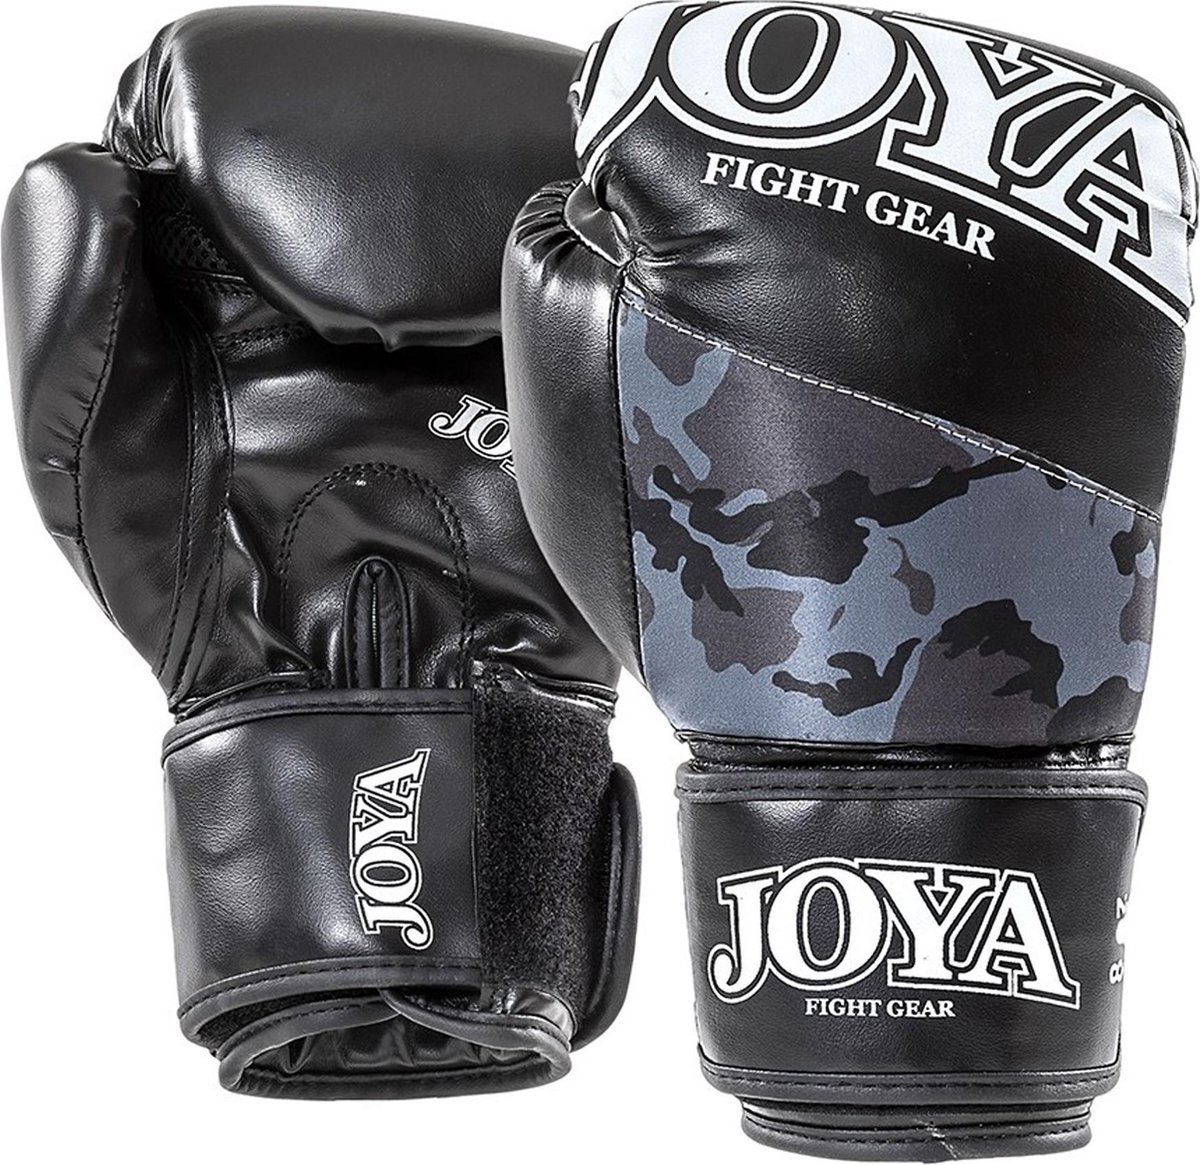 Joya Fight Gear - (kick)bokshandschoenen - Top One Camo - Zwart - 12oz